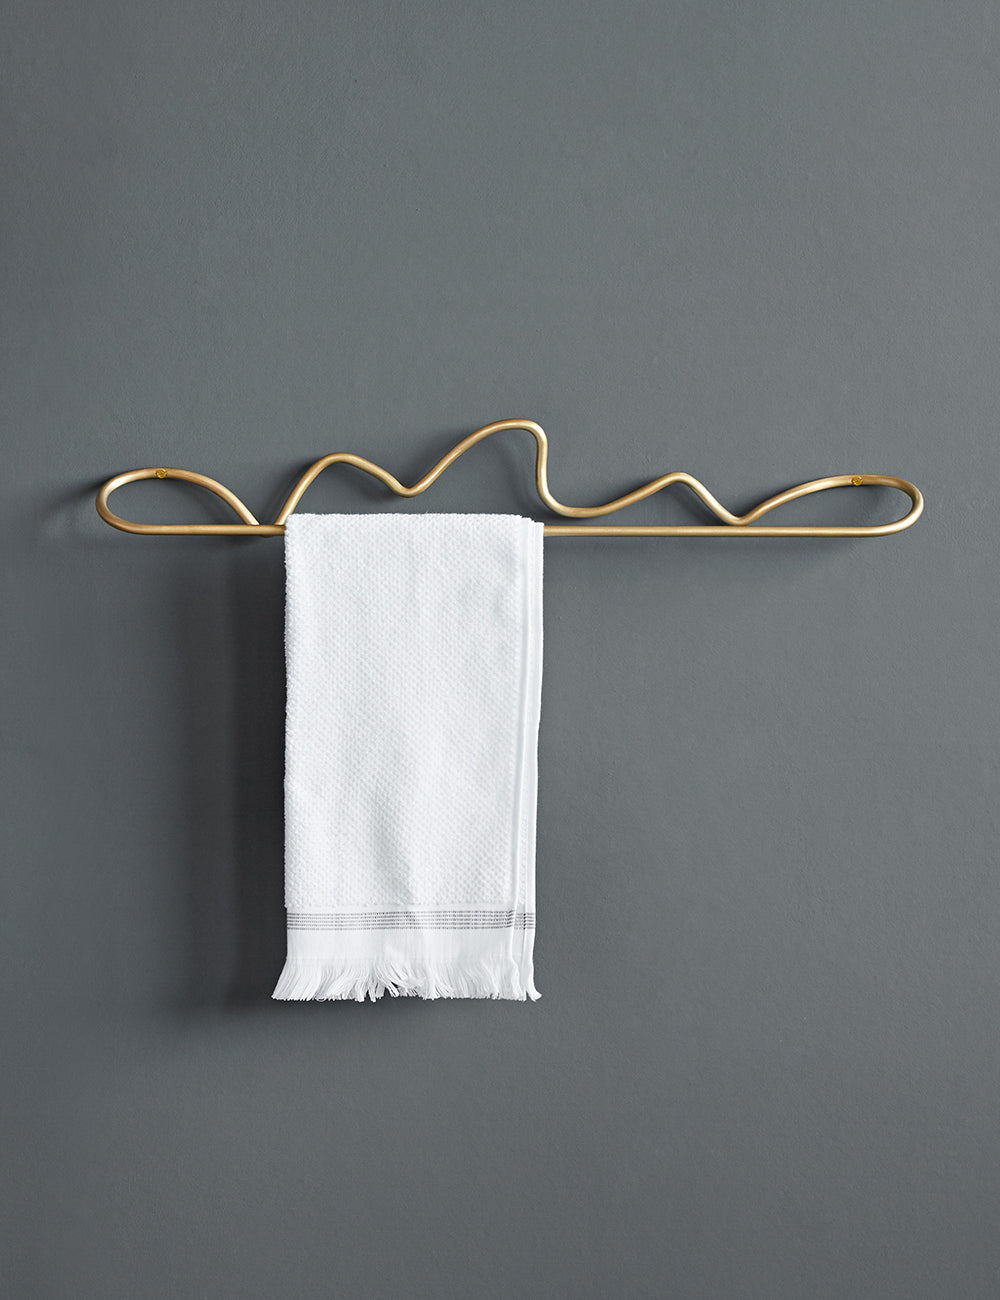 Ferm Living Curvature Brass Towel Hanger – Rose and Grey